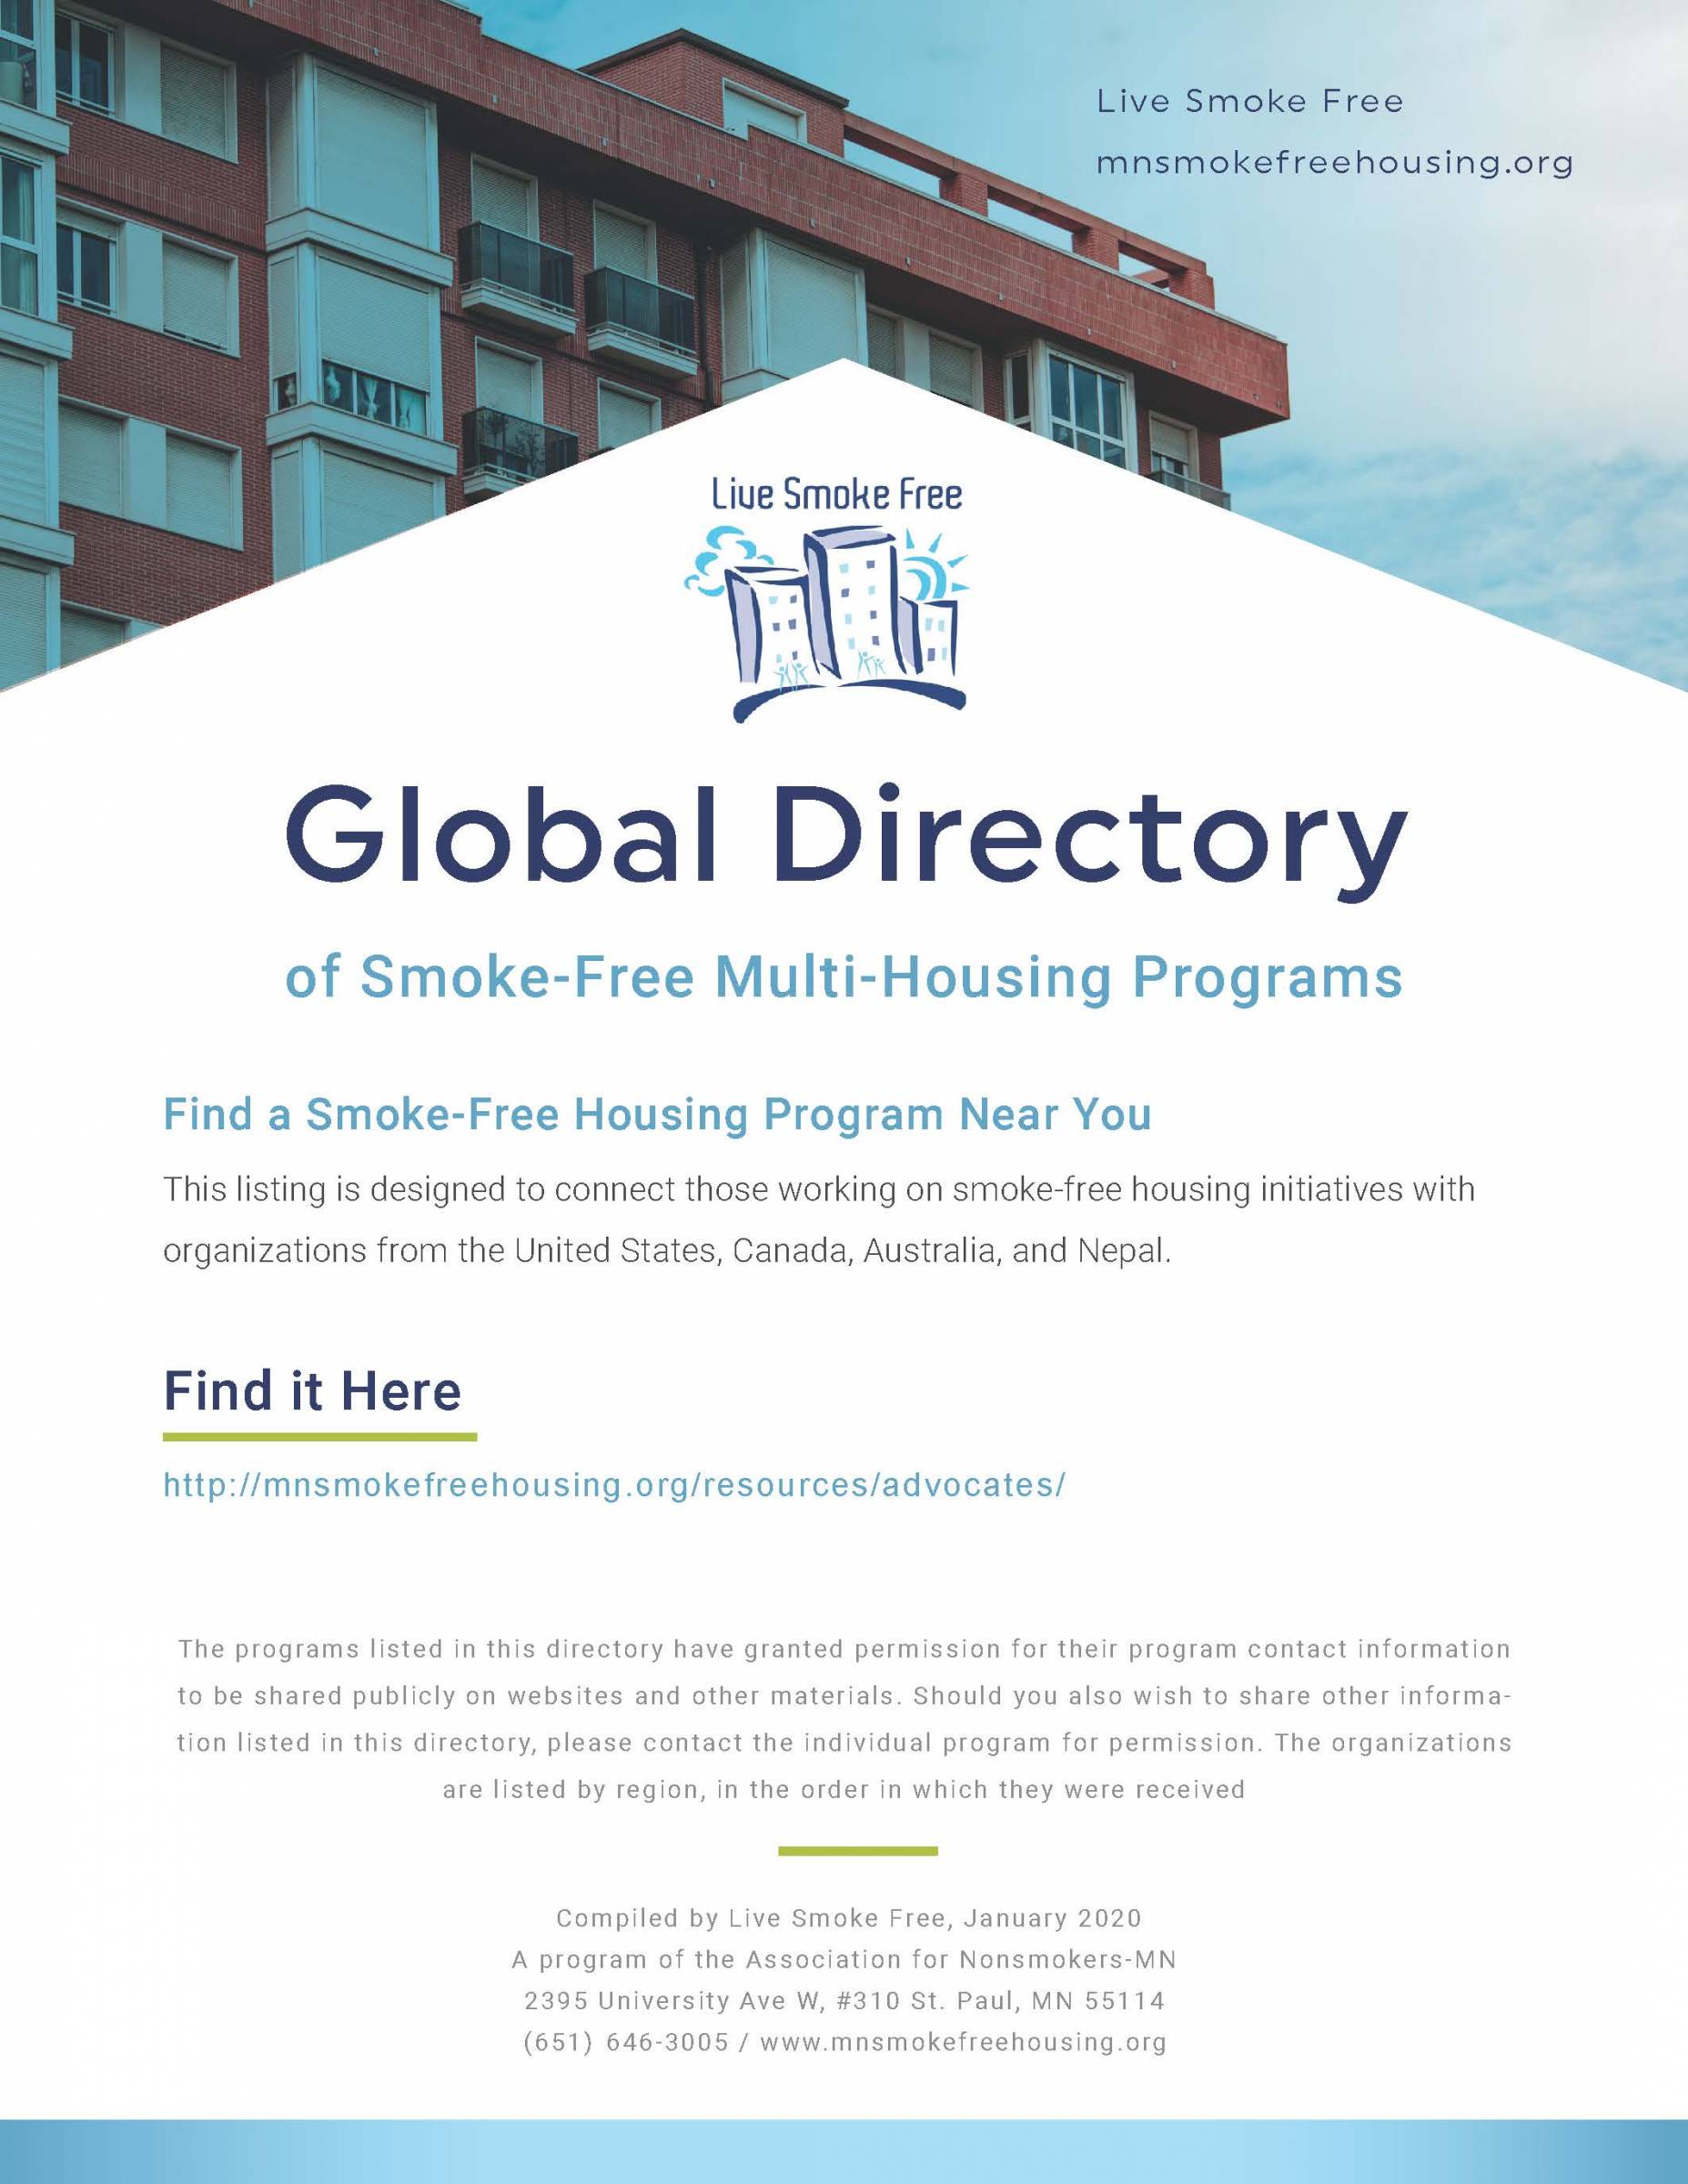 Global Directory of Smoke-Free Multi-Housing Programs